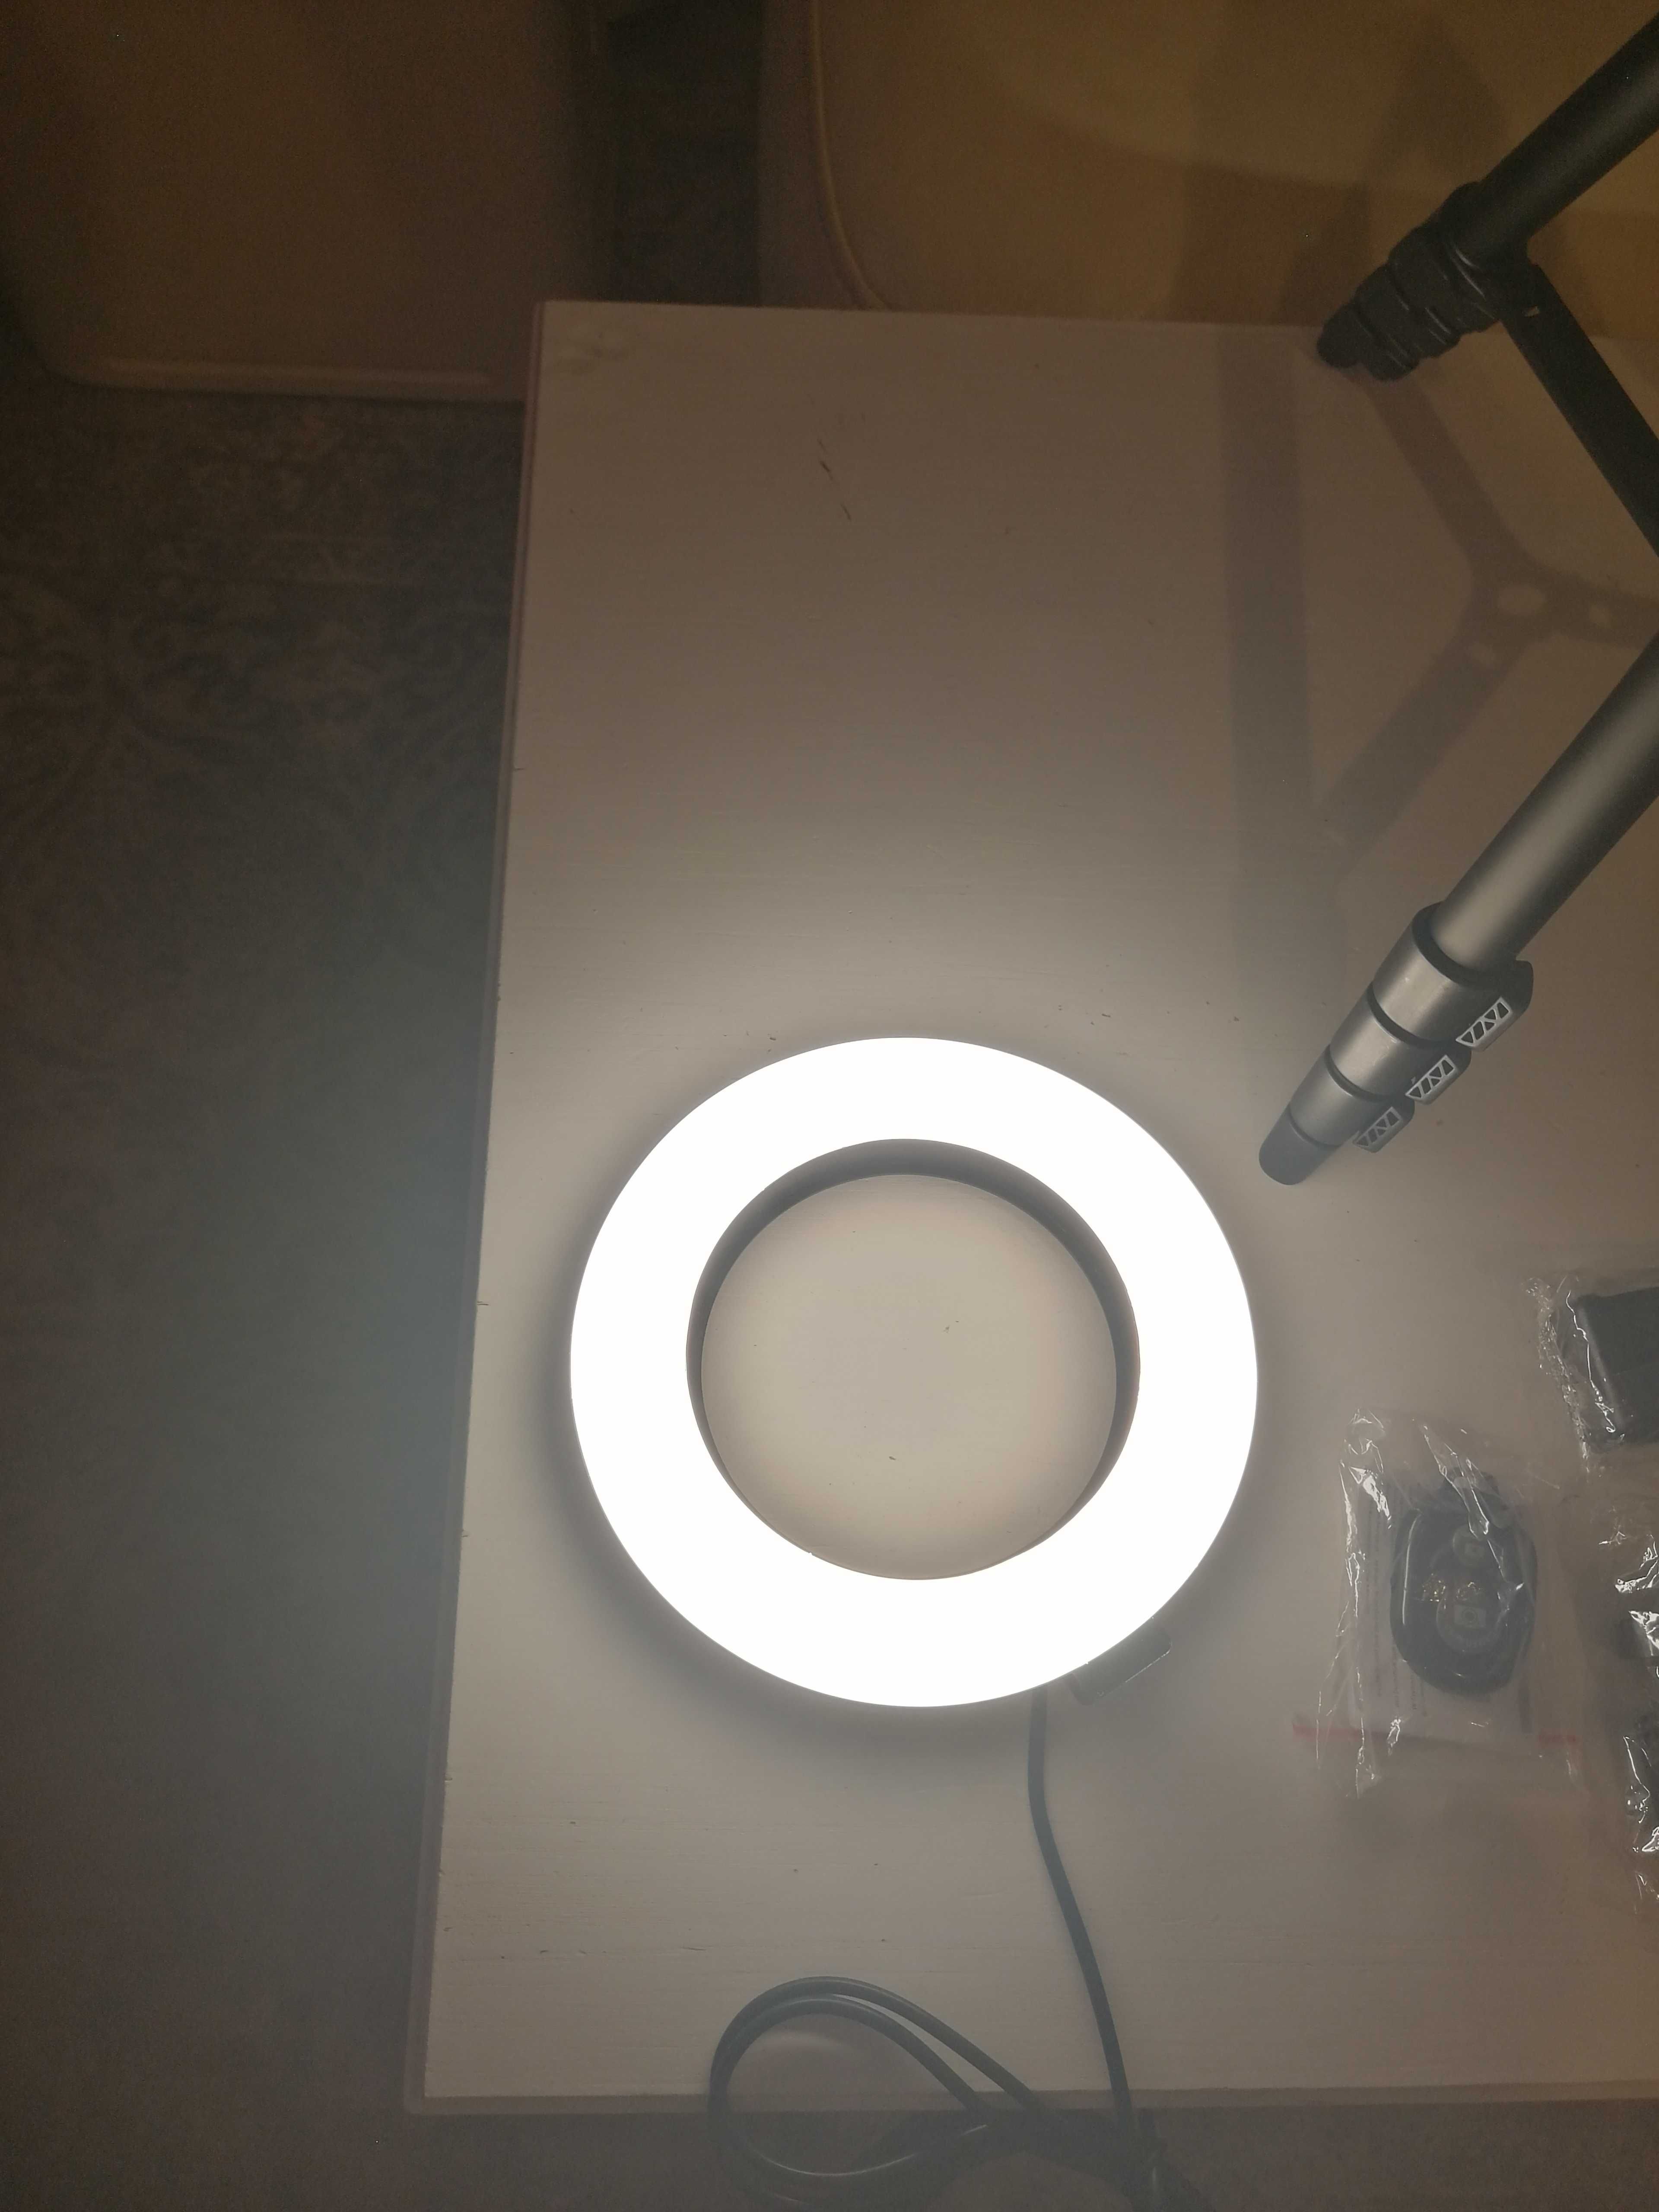 AMZDEAL AZ-11 ring light lampa pierścieniowa LED 6